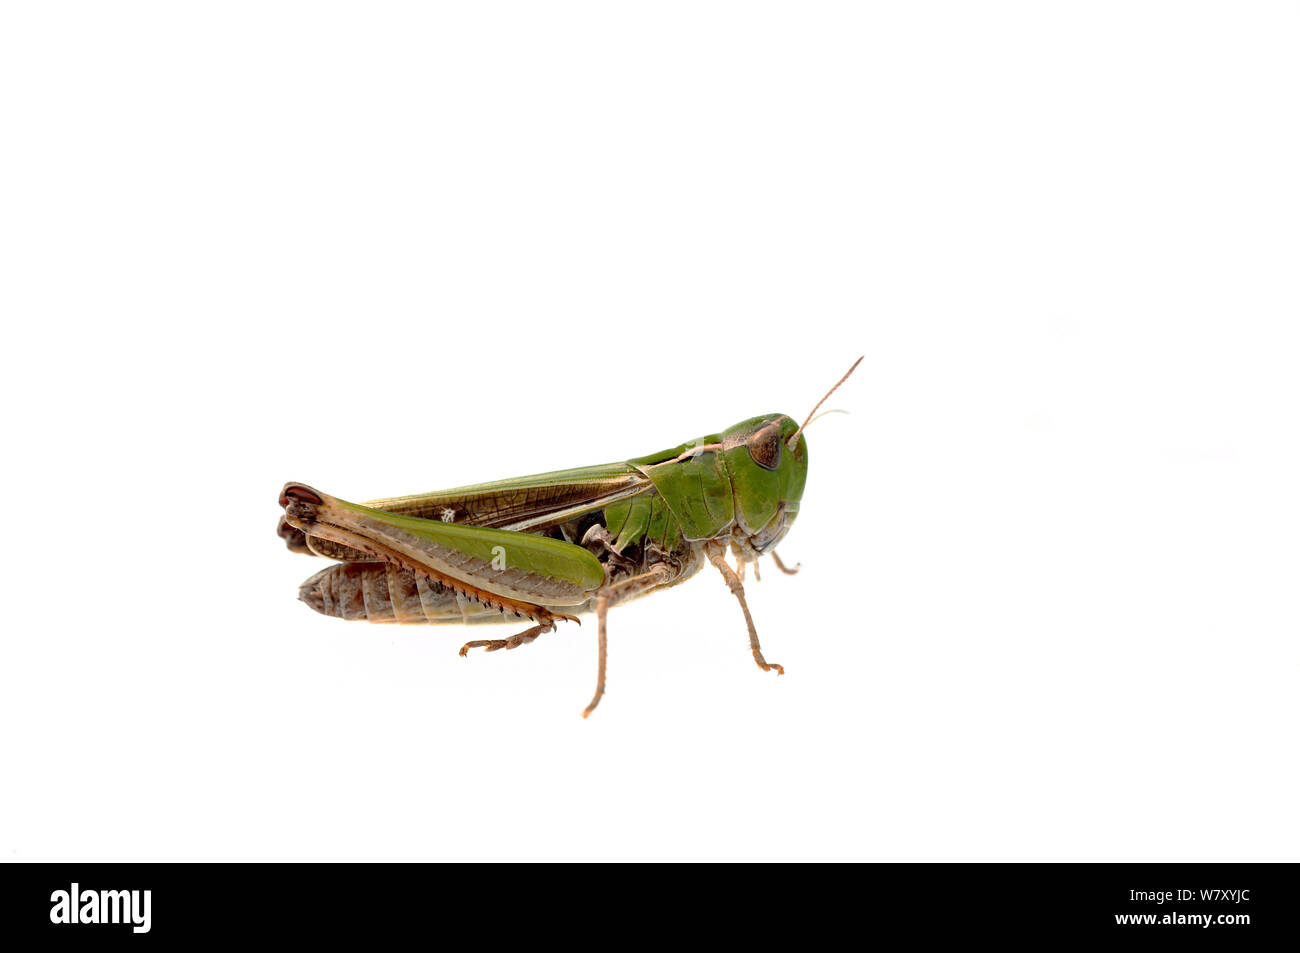 Stripe-winged grasshopper (Stenobothrus lineatus), Quirnheim, Rhineland-Palatinate, Germany, August. meetyourneighbours.net project Stock Photo